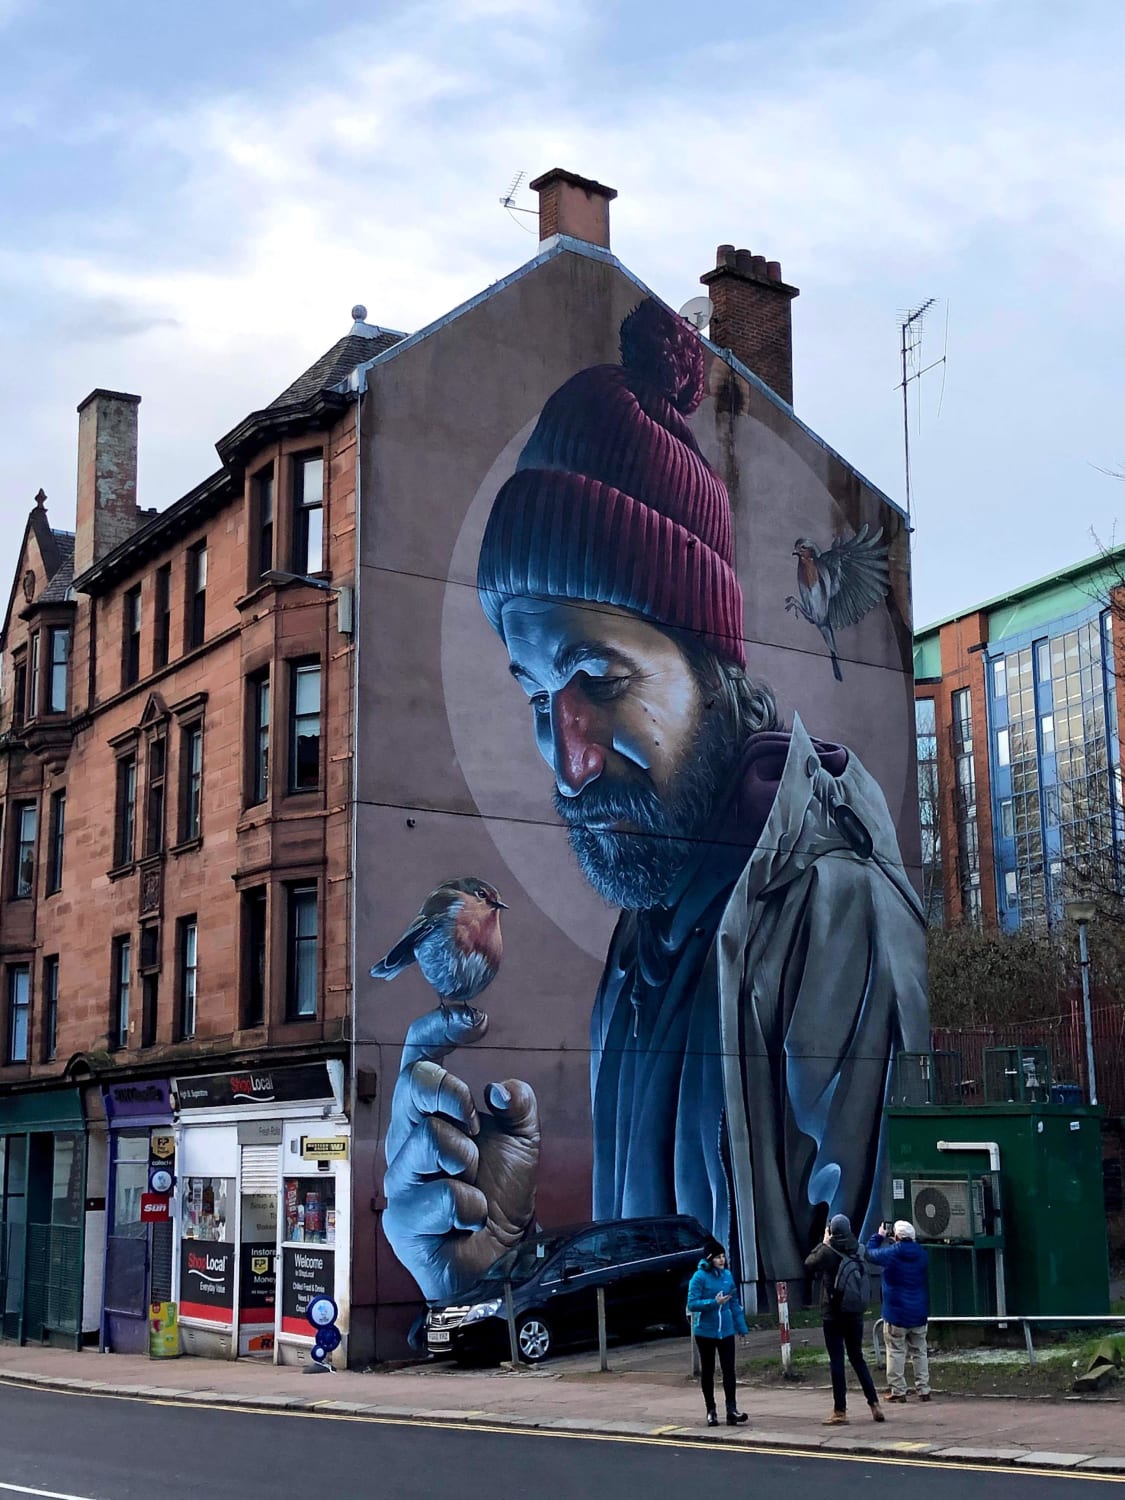 Beautiful graffiti in Glasgow 🏴󠁧󠁢󠁳󠁣󠁴󠁿